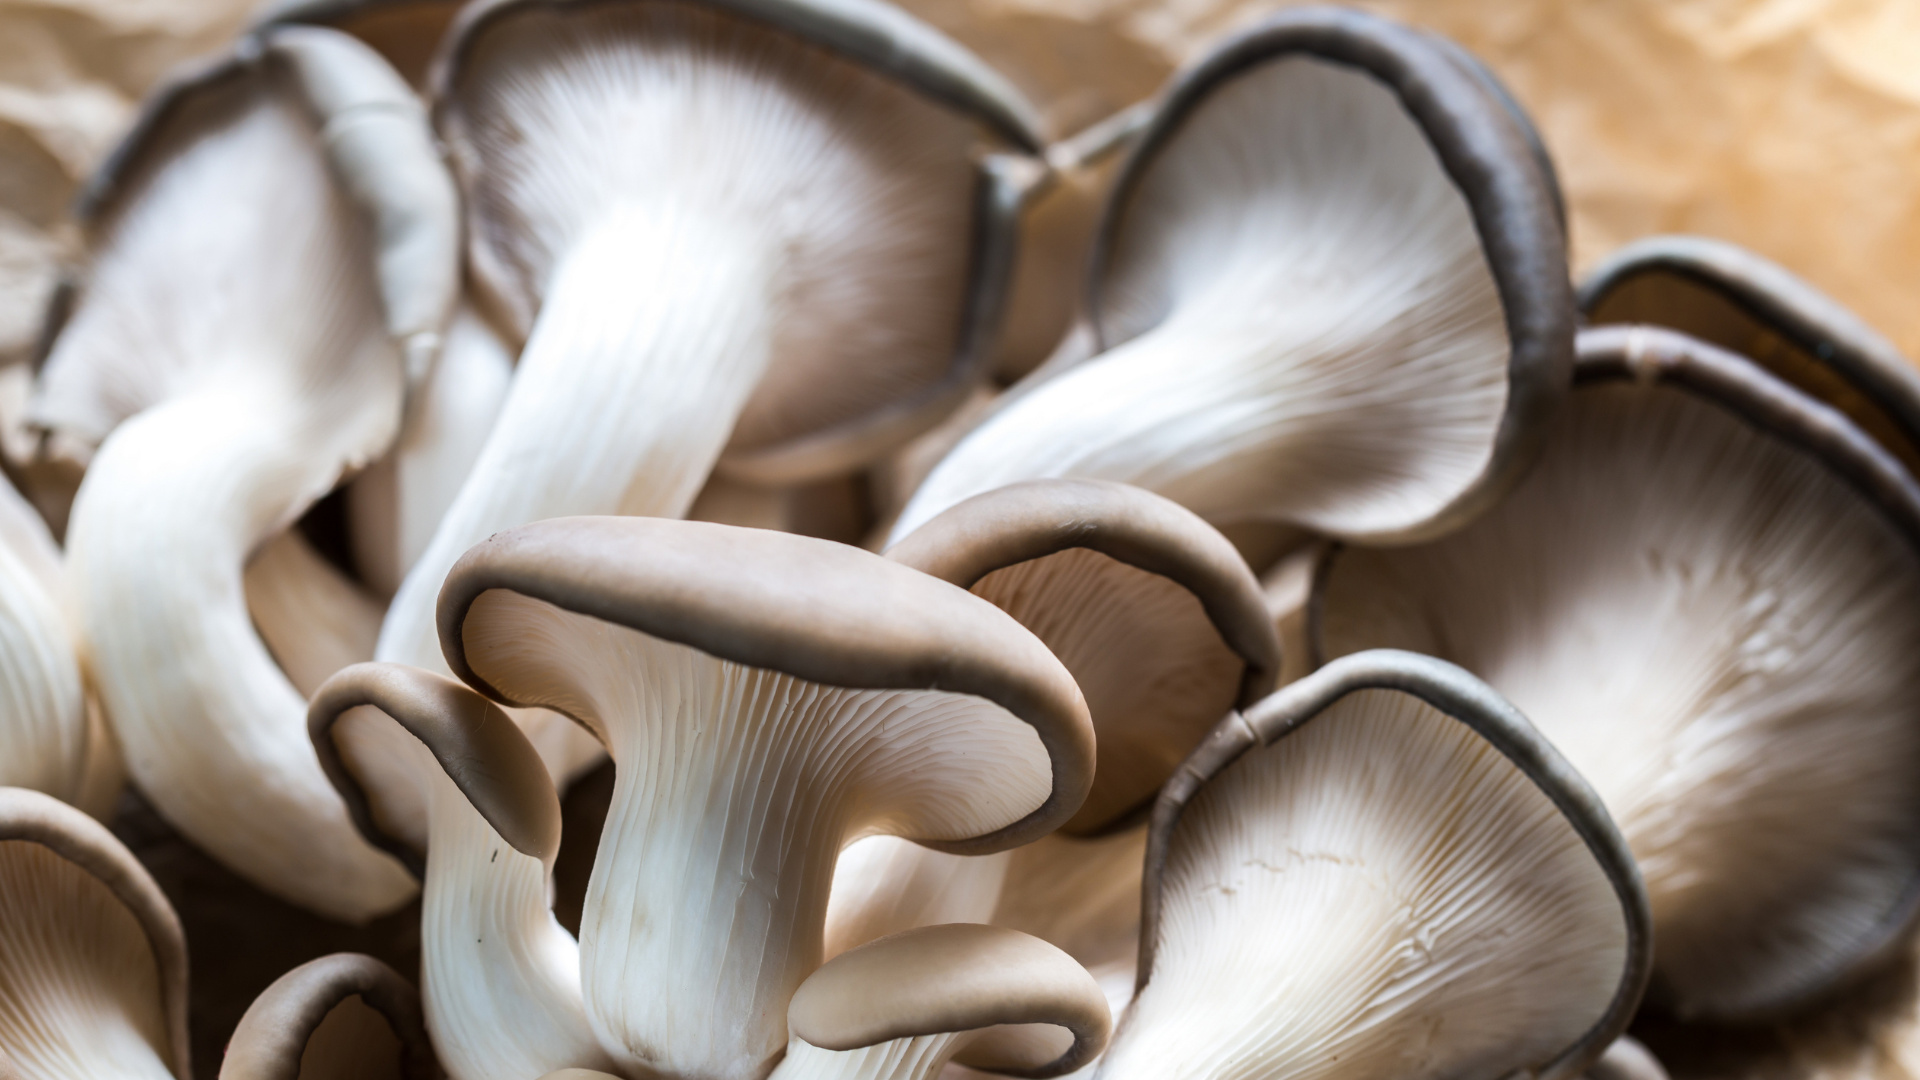 Oyster mushrooms, Mushroom growing workshop, Piedmont Park Conservancy, Hands-on learning, 1920x1080 Full HD Desktop